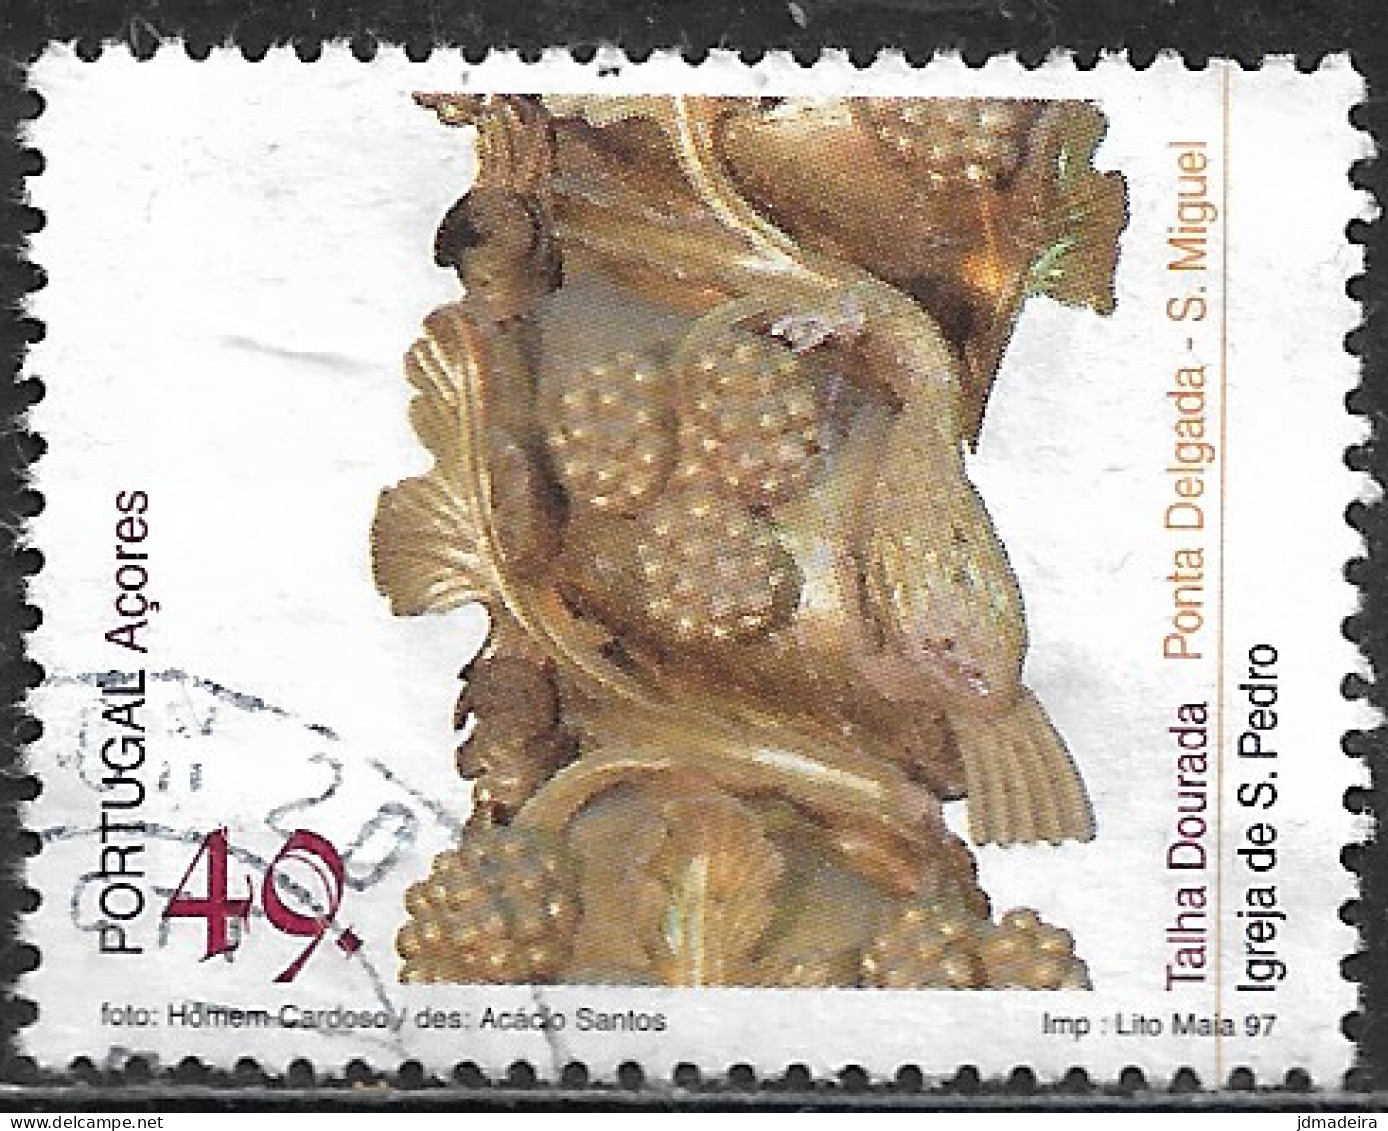 Portugal – 1997 Gold Carving 49. Used Stamp - Usado